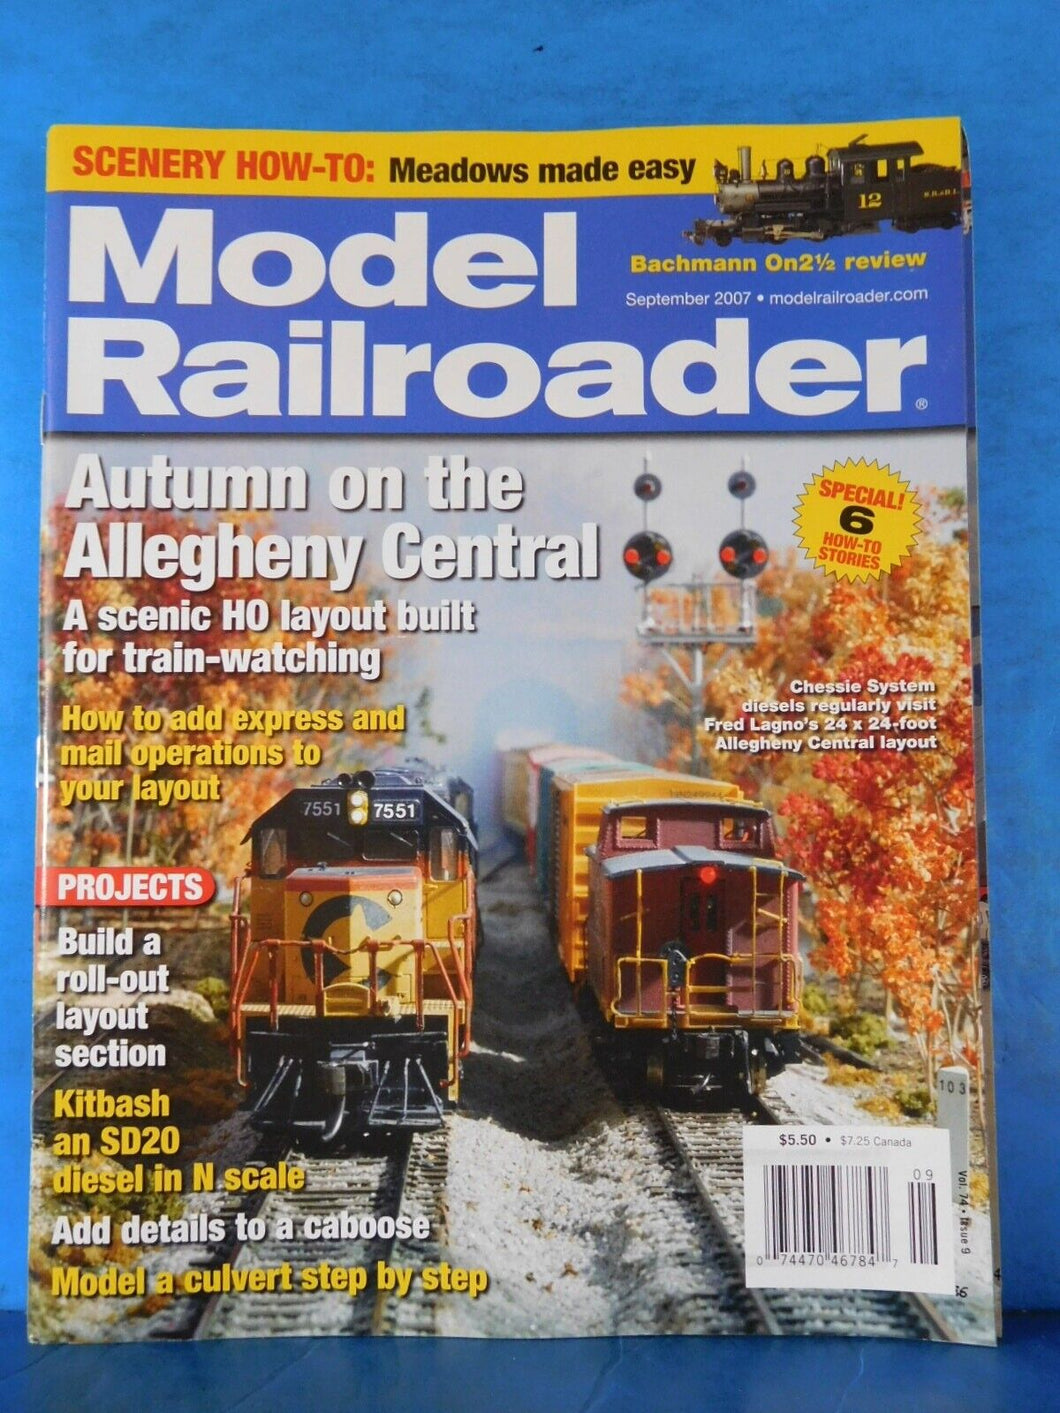 Model Railroader Magazine 2007 September Add details to a caboose Build culvert